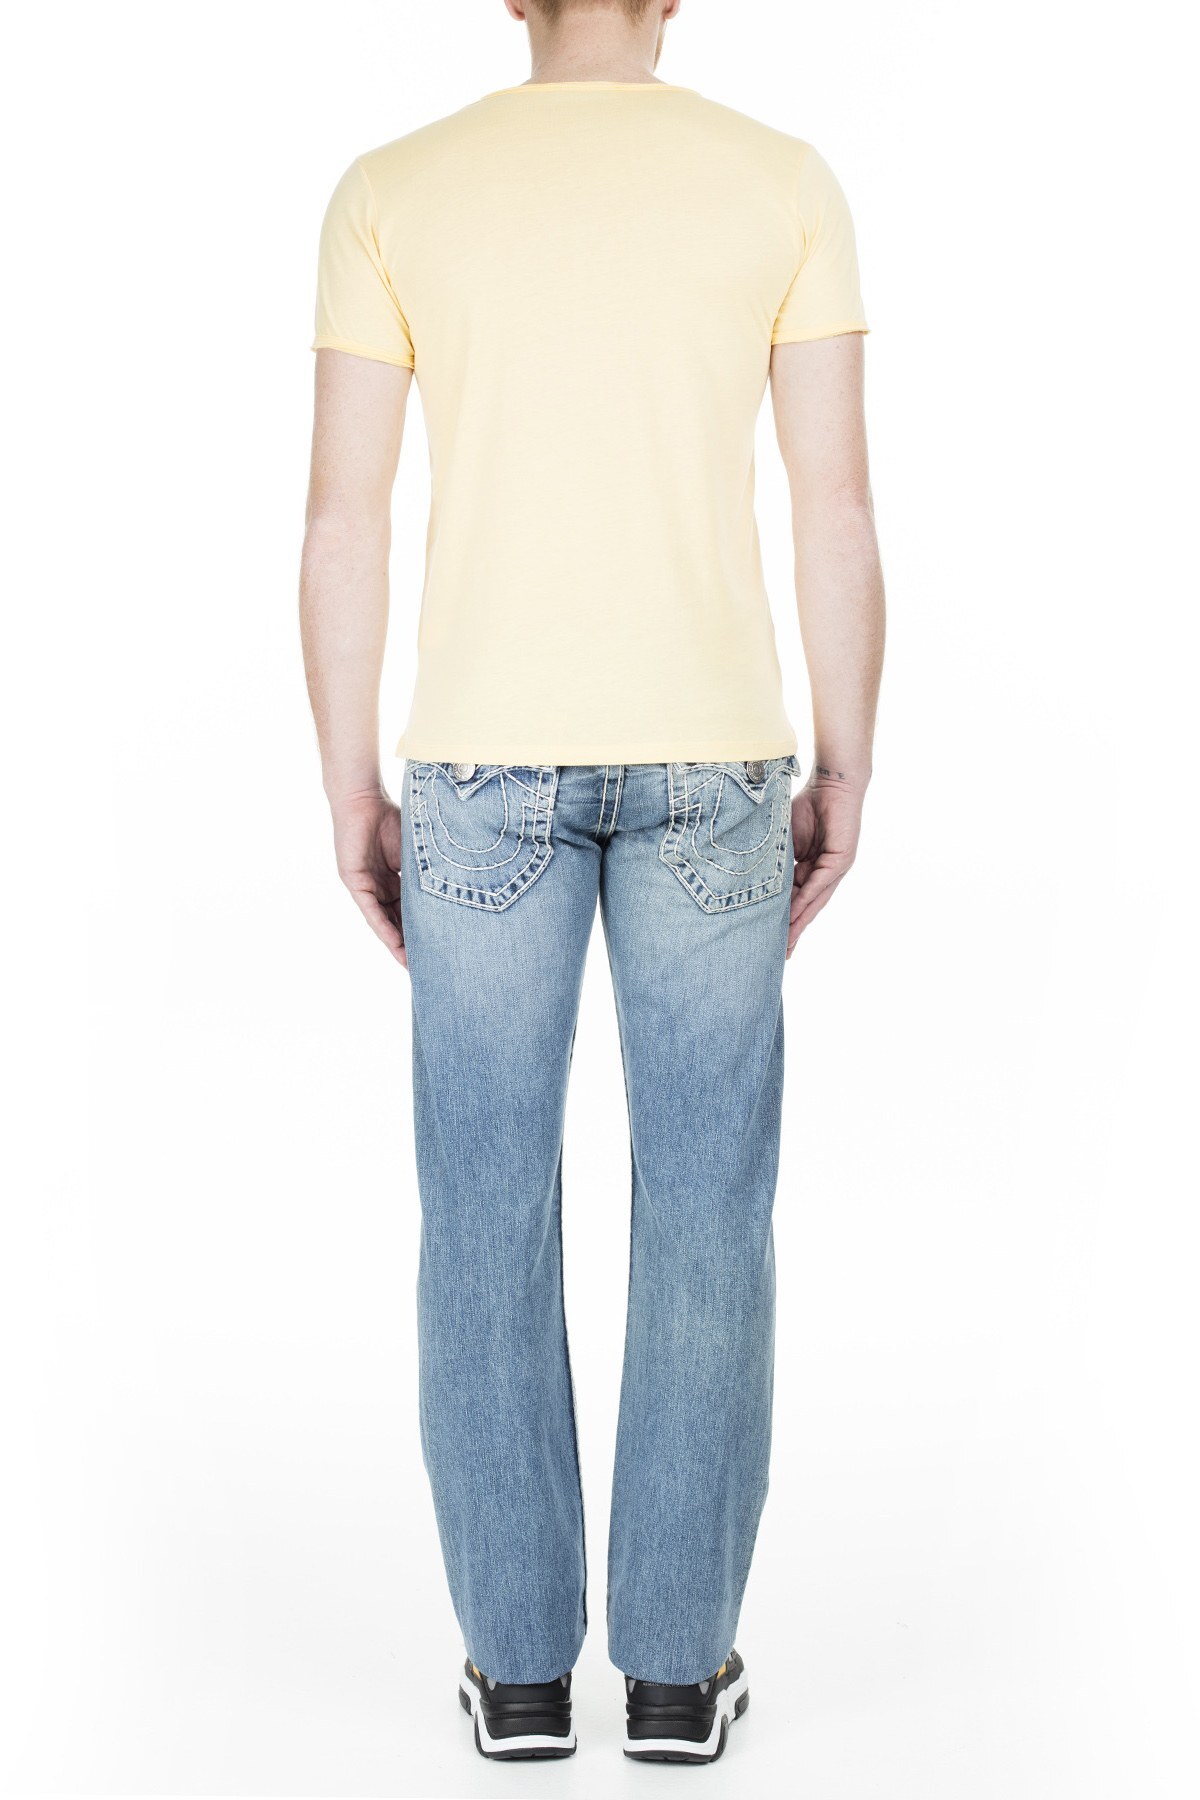 True Religion Jeans Erkek Kot Pantolon M24859BB0 LACİVERT